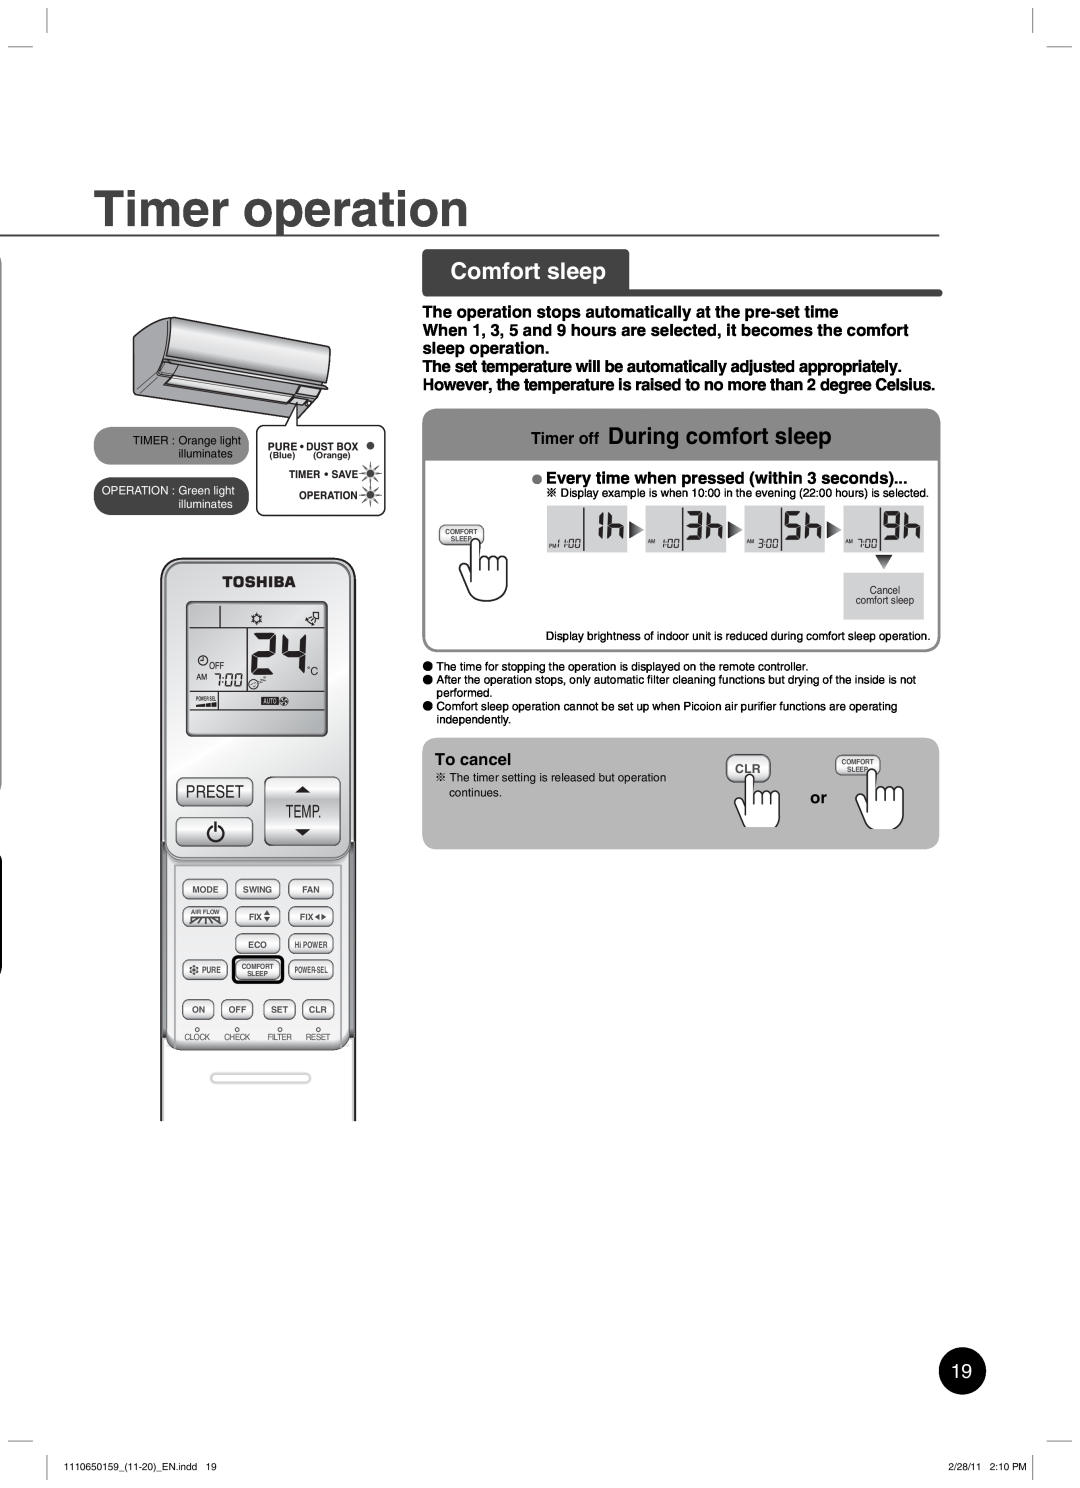 Toshiba RAS-10JKCVP Timer operation, Comfort sleep, Timer off During comfort sleep, Preset Temp, To cancel, illuminates 